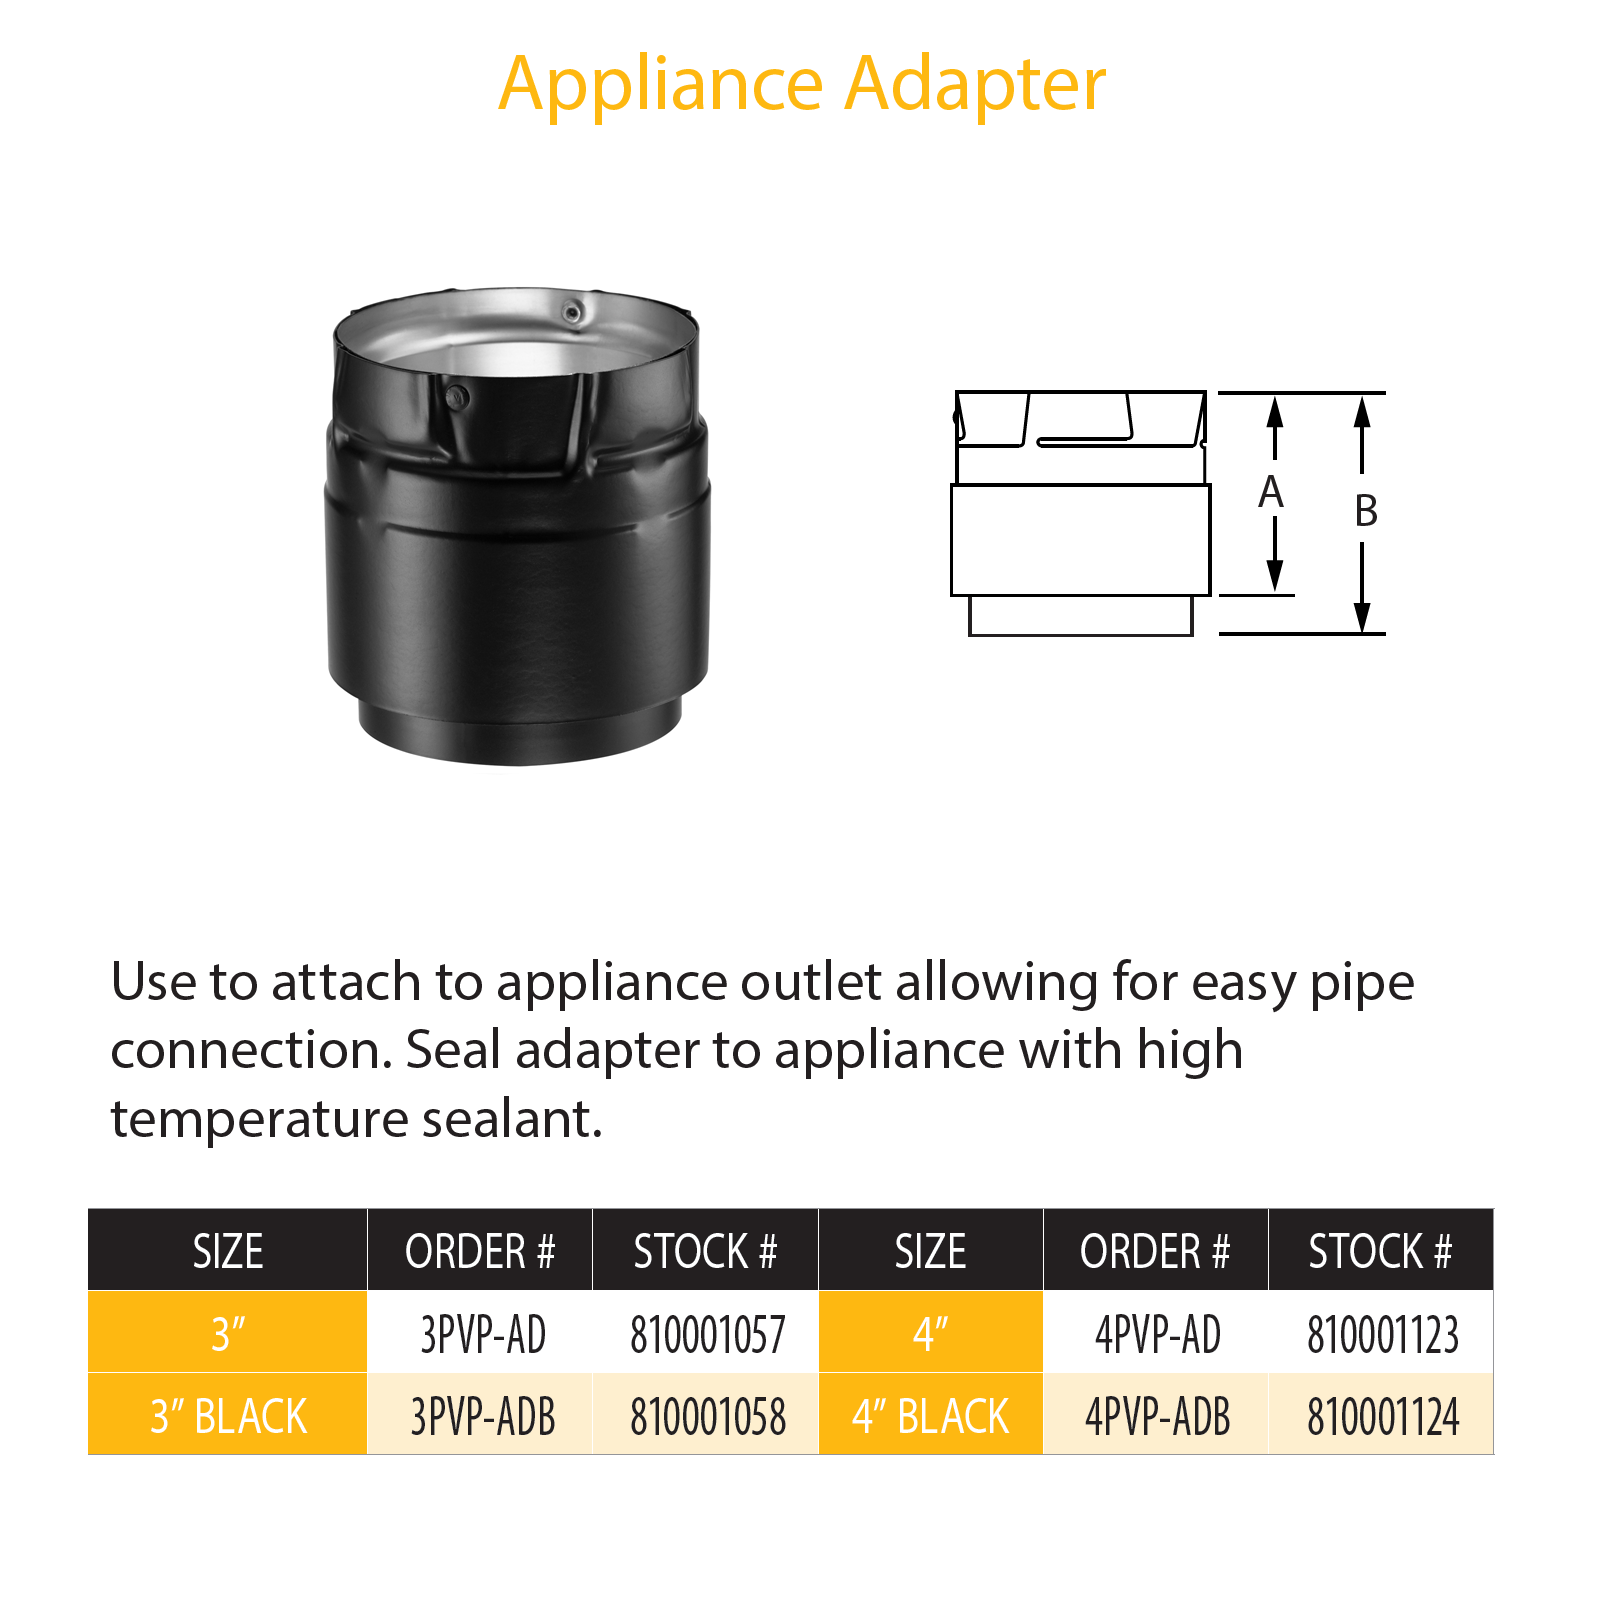 DuraVent Pellet Vent Pro Appliance Adapter (black) | 4PVP-ADB